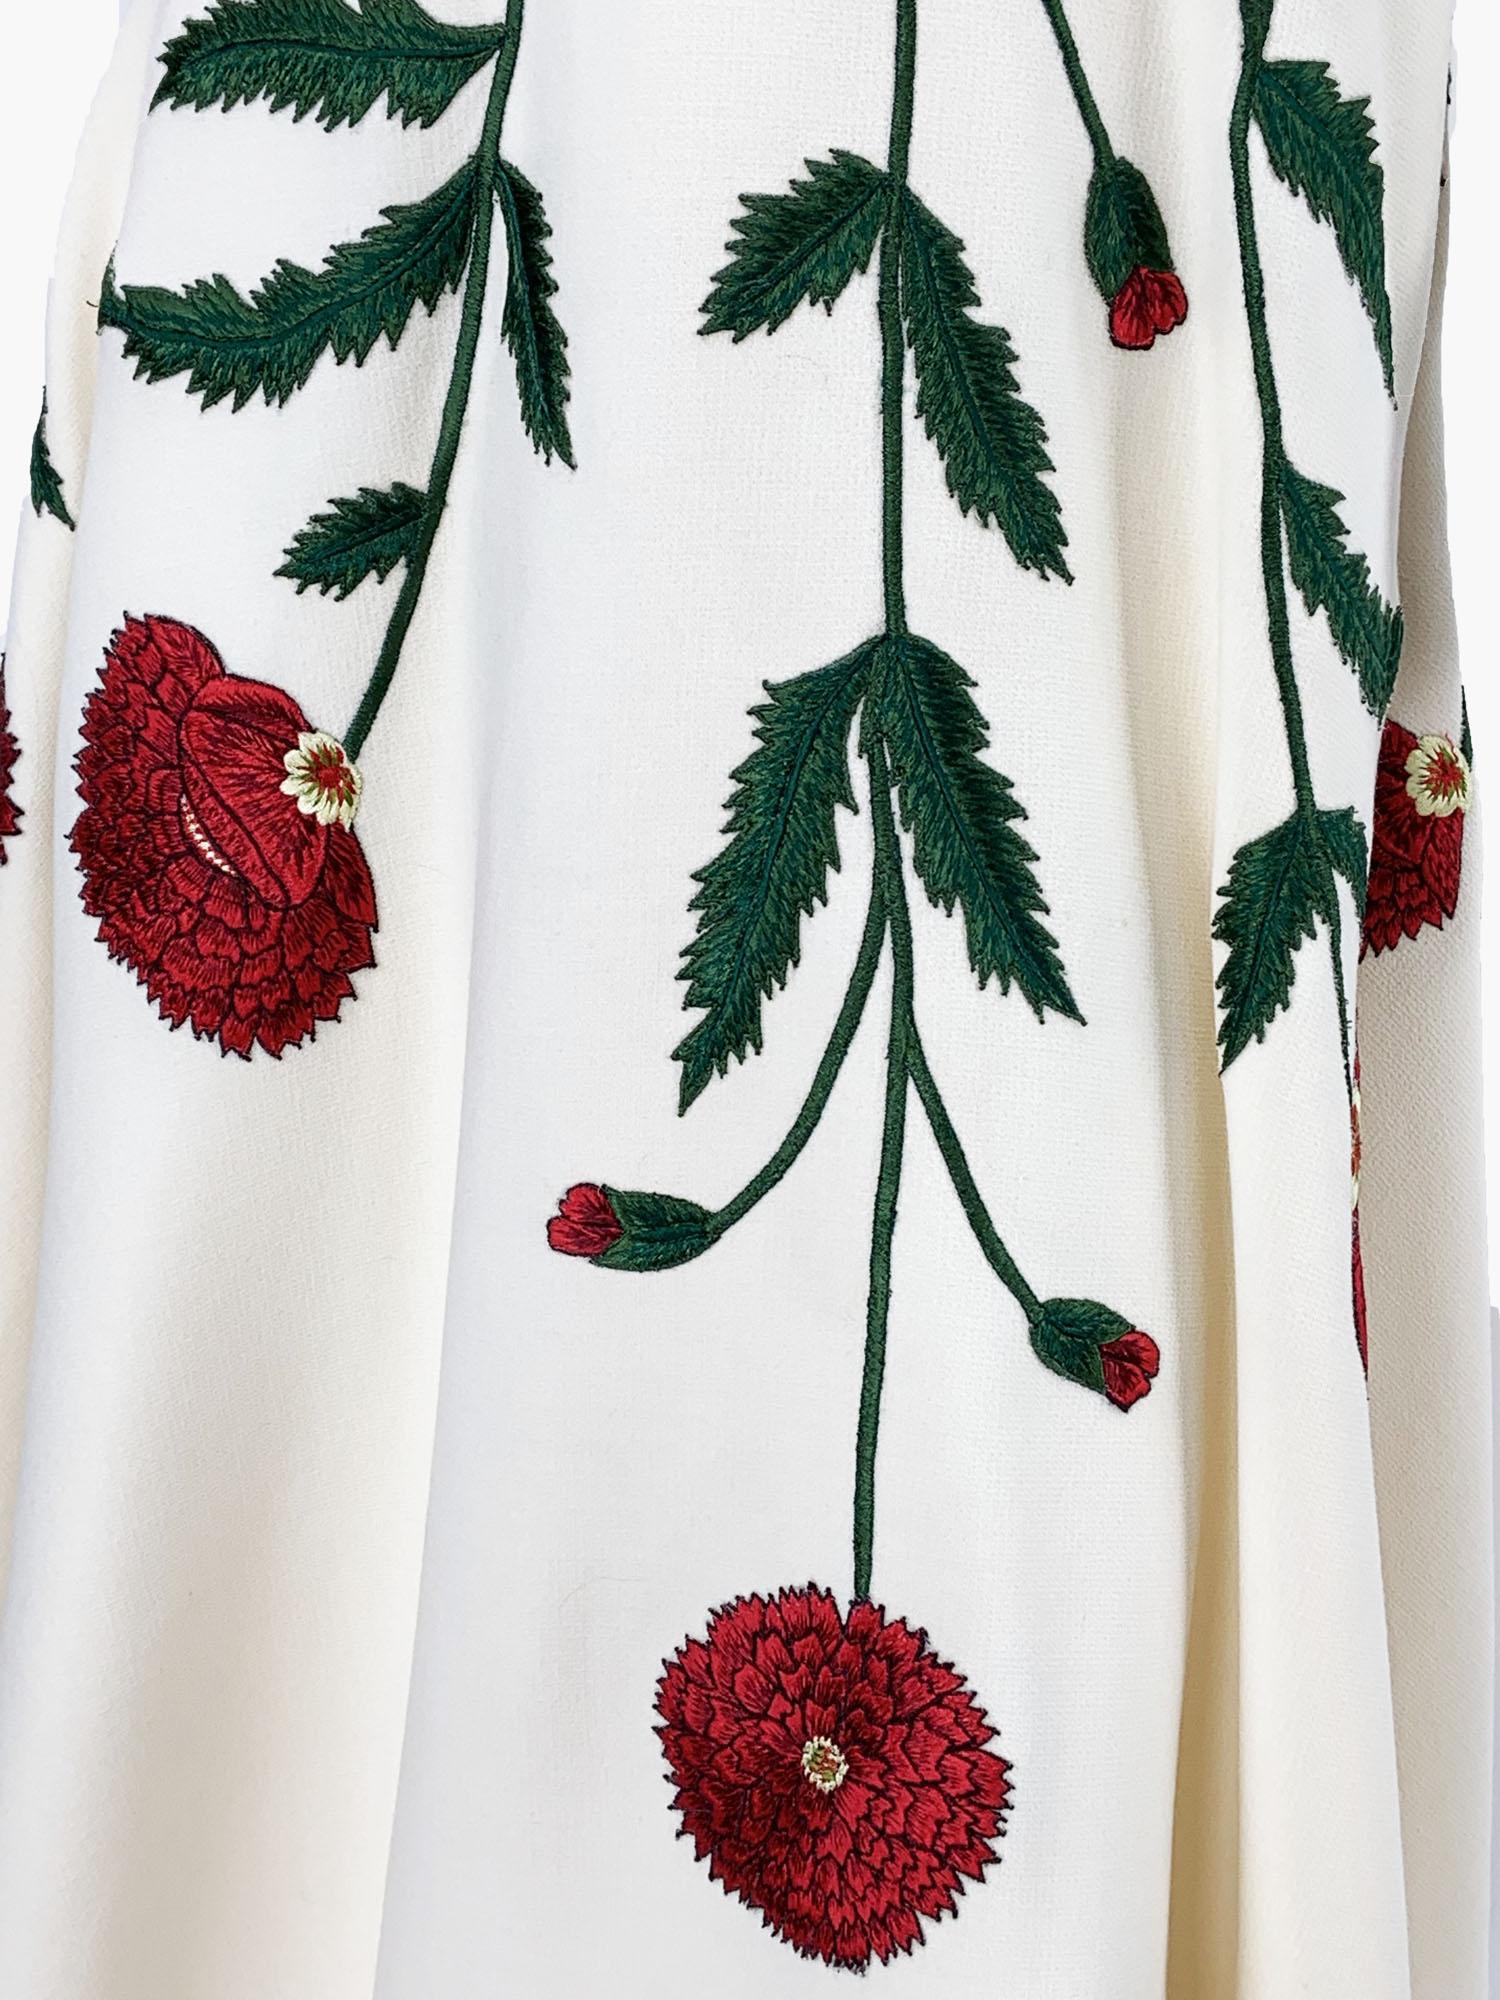 Women's NWT Oscar de la Renta S/S 2019 Poppy Embroidered Stretch-Wool Crepe Dress US 10 For Sale